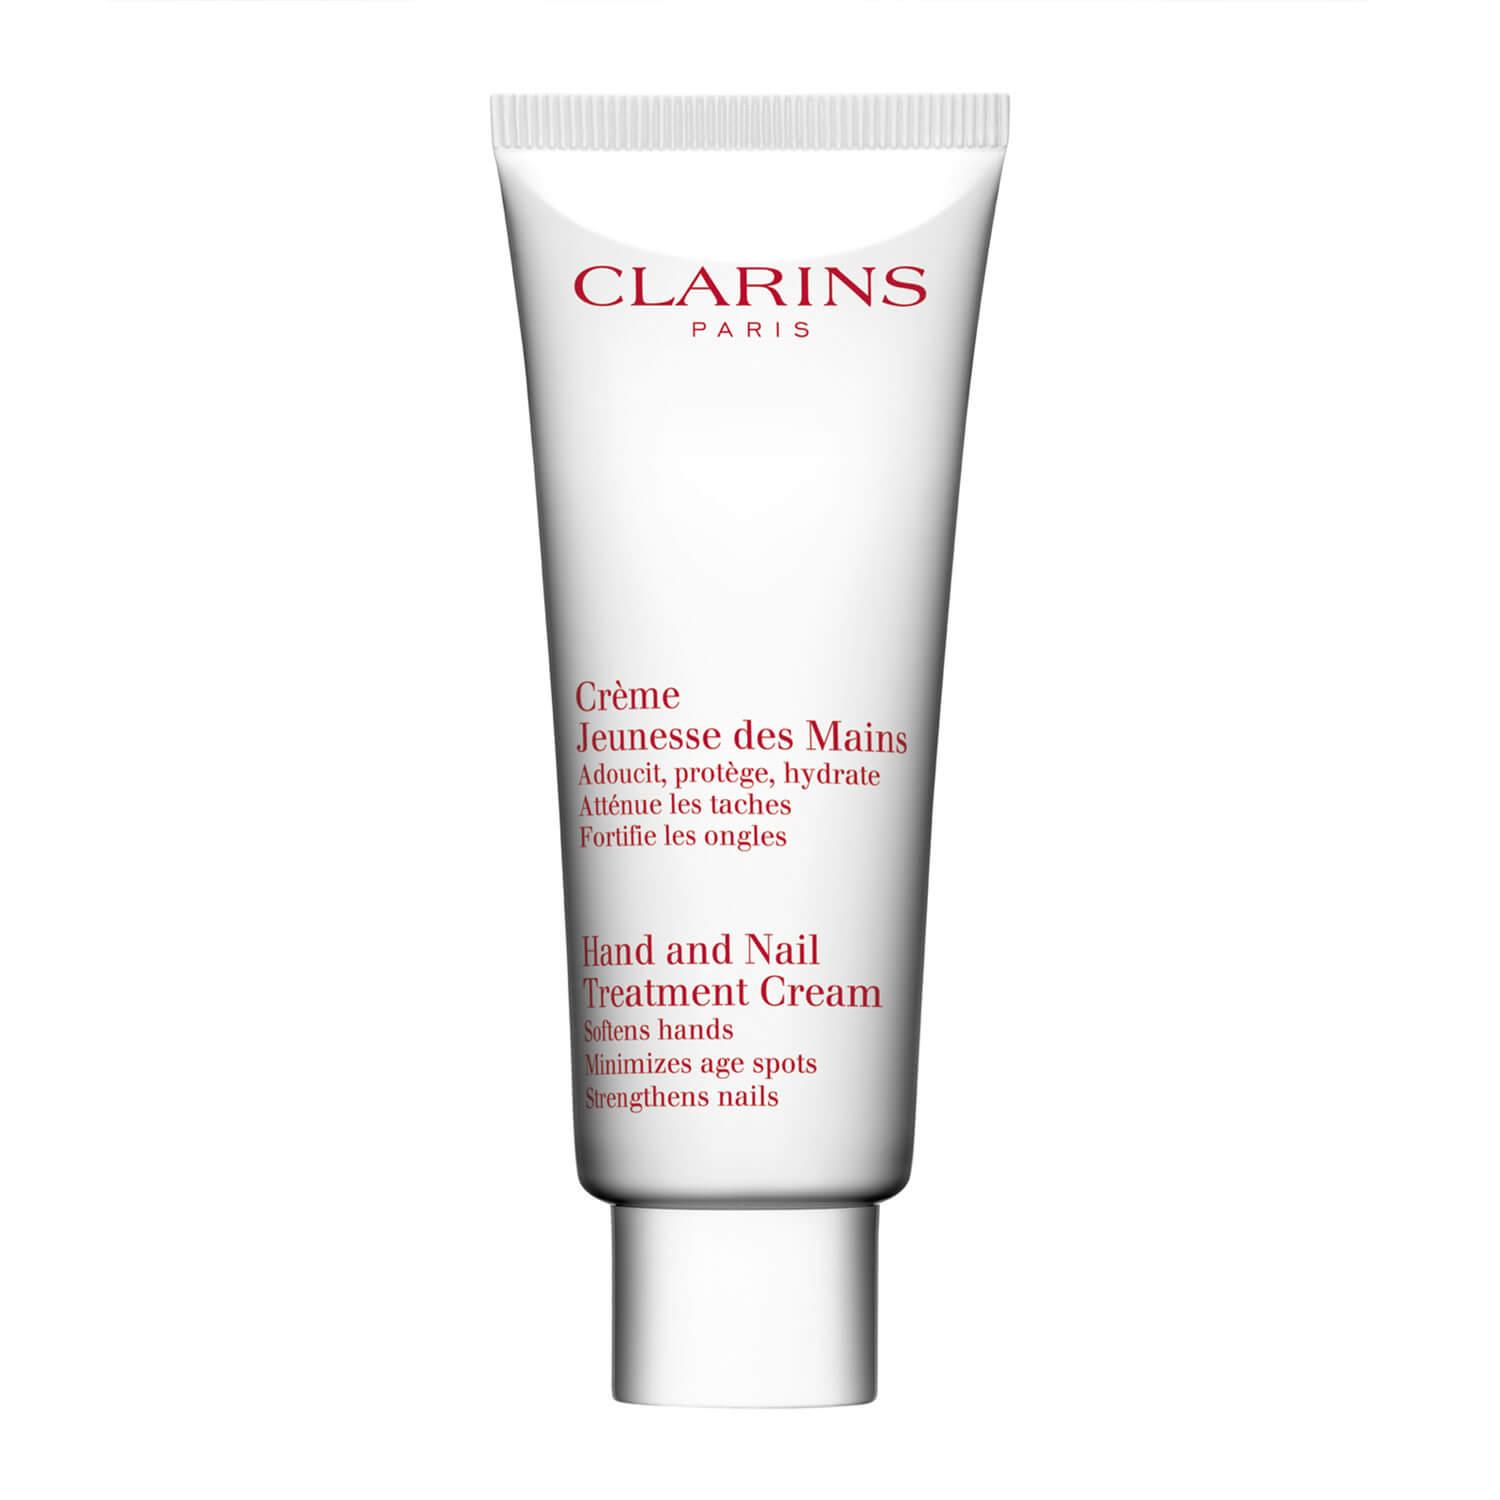 Clarins Body - Hand and Nail Treatment Cream